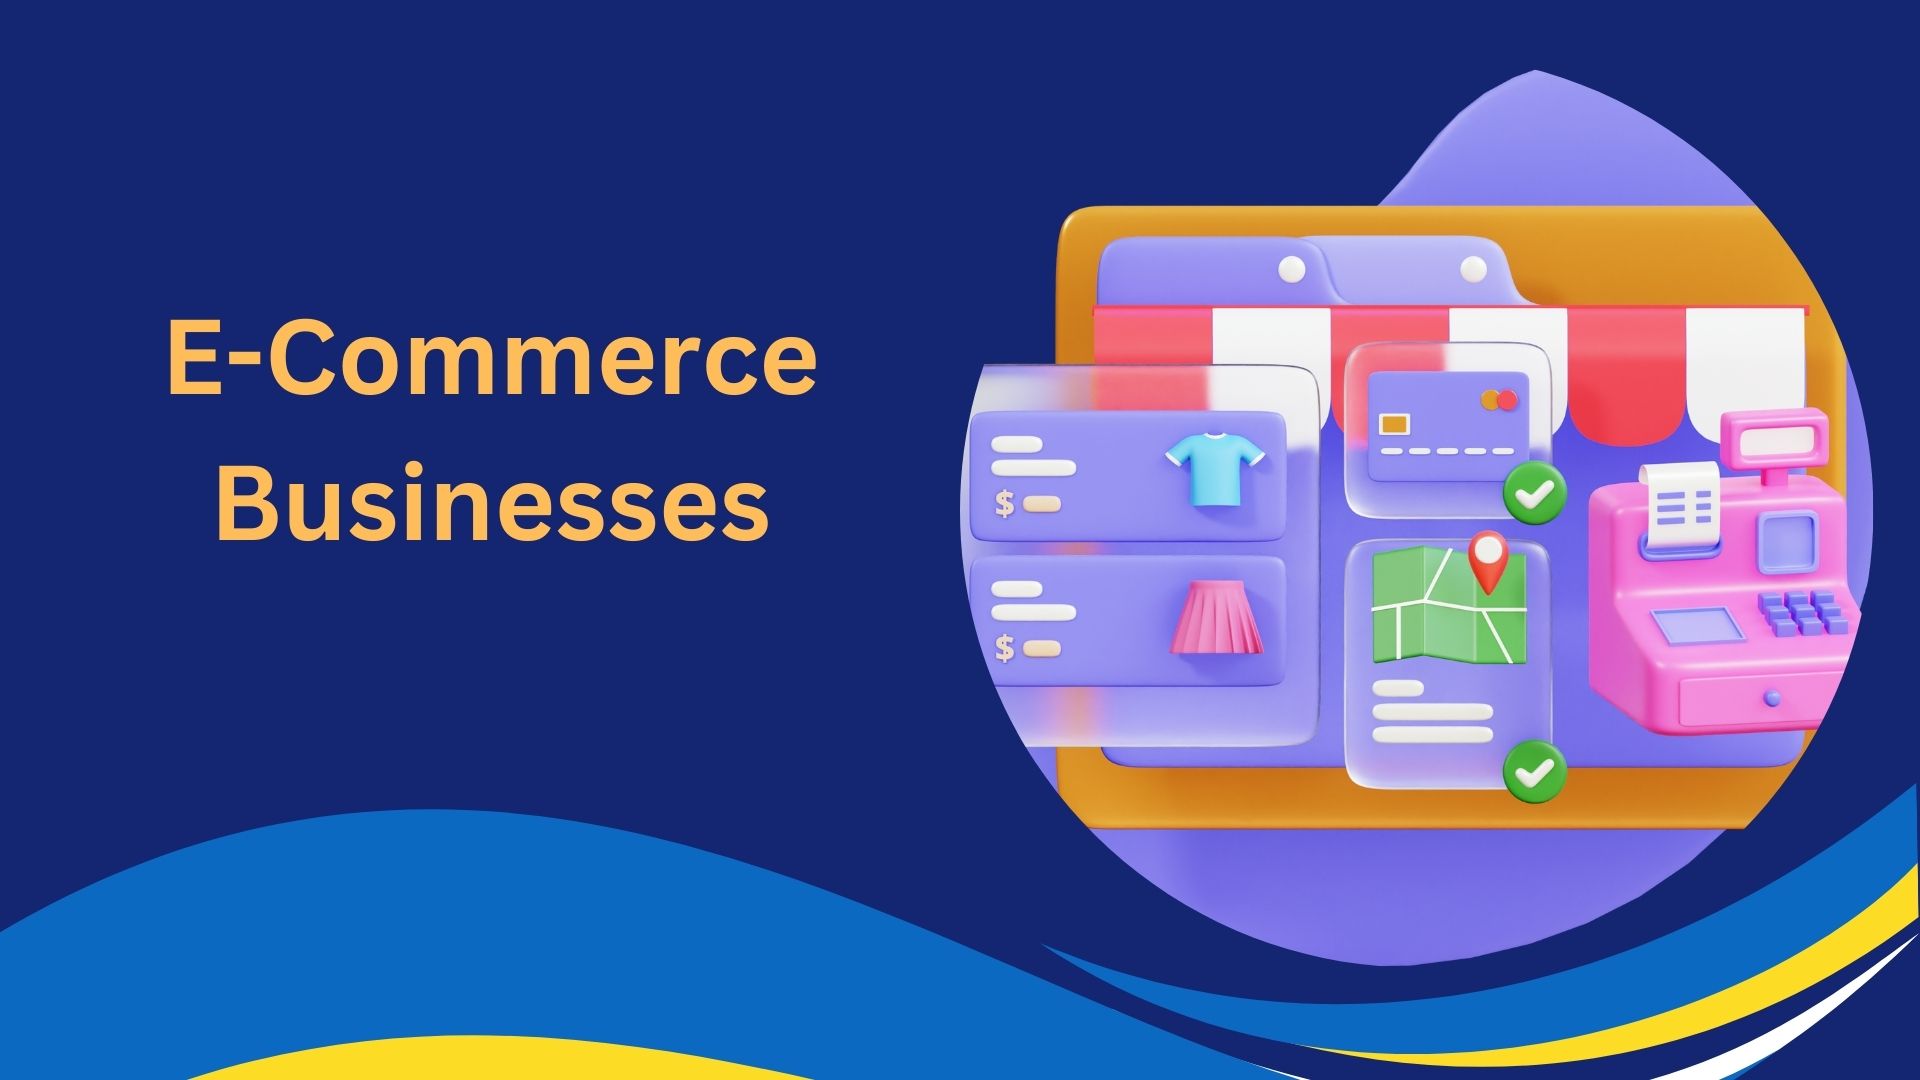 E-Commerce Businesses